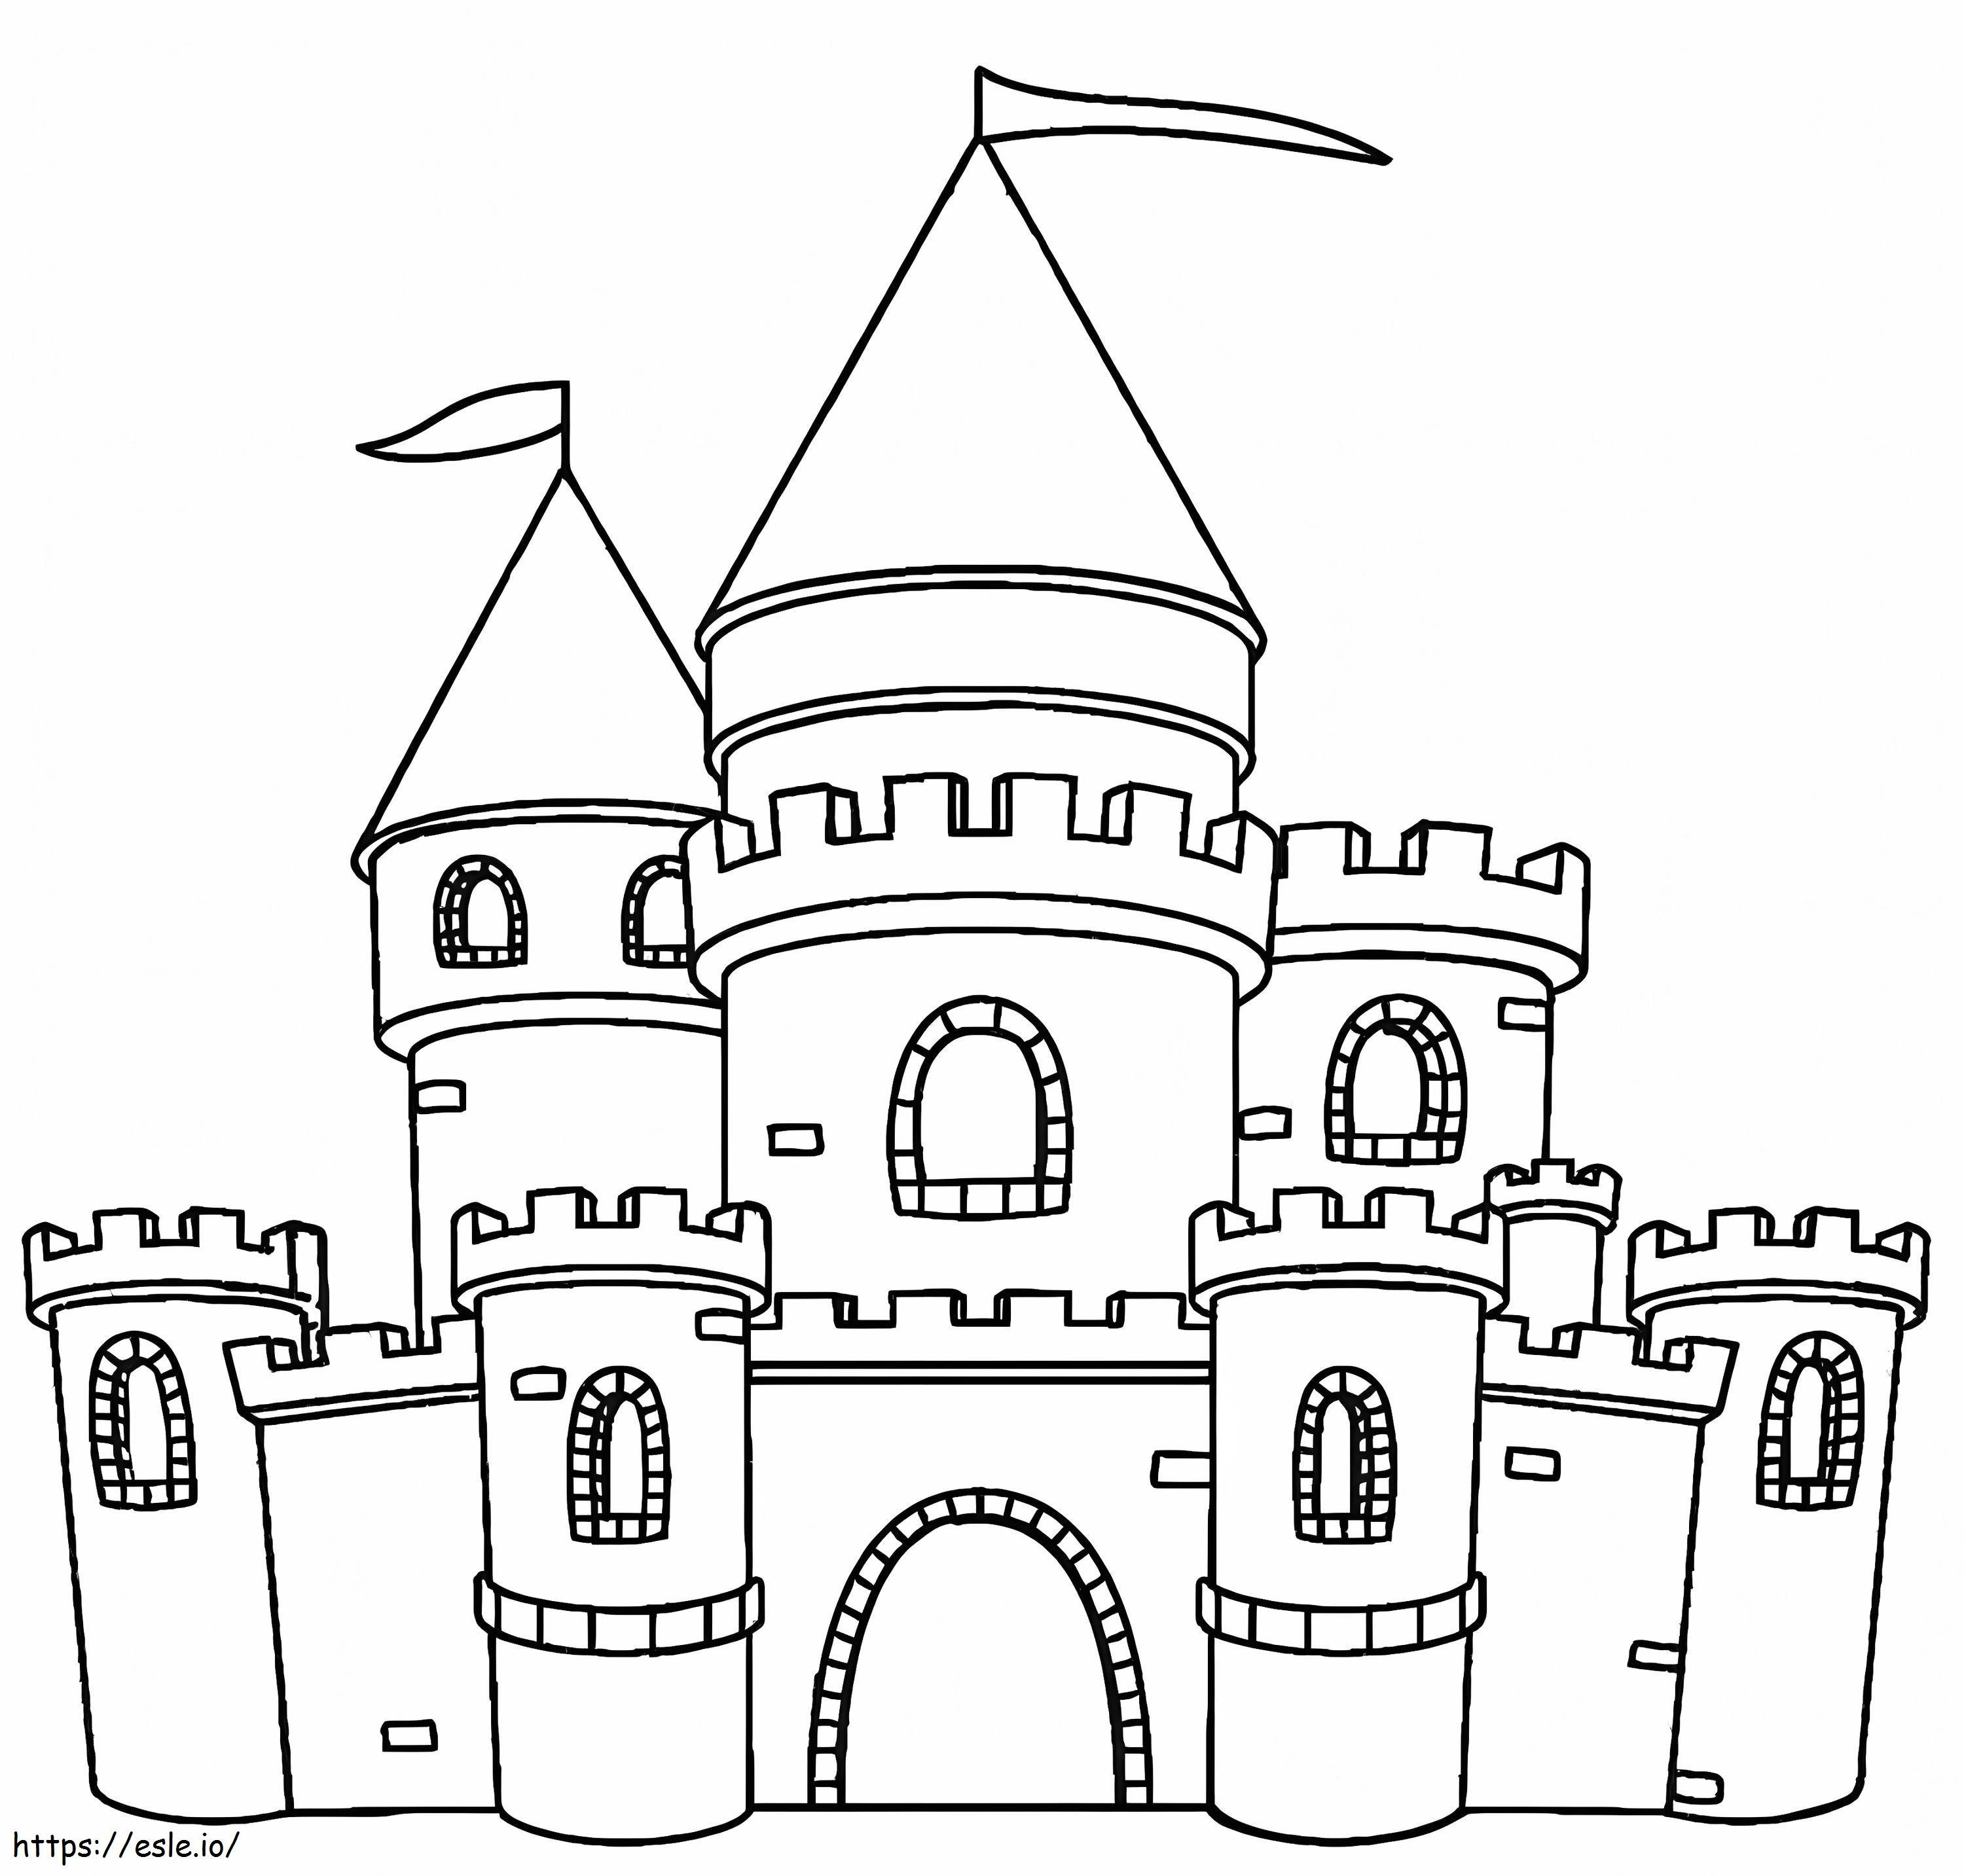 Big Castle coloring page